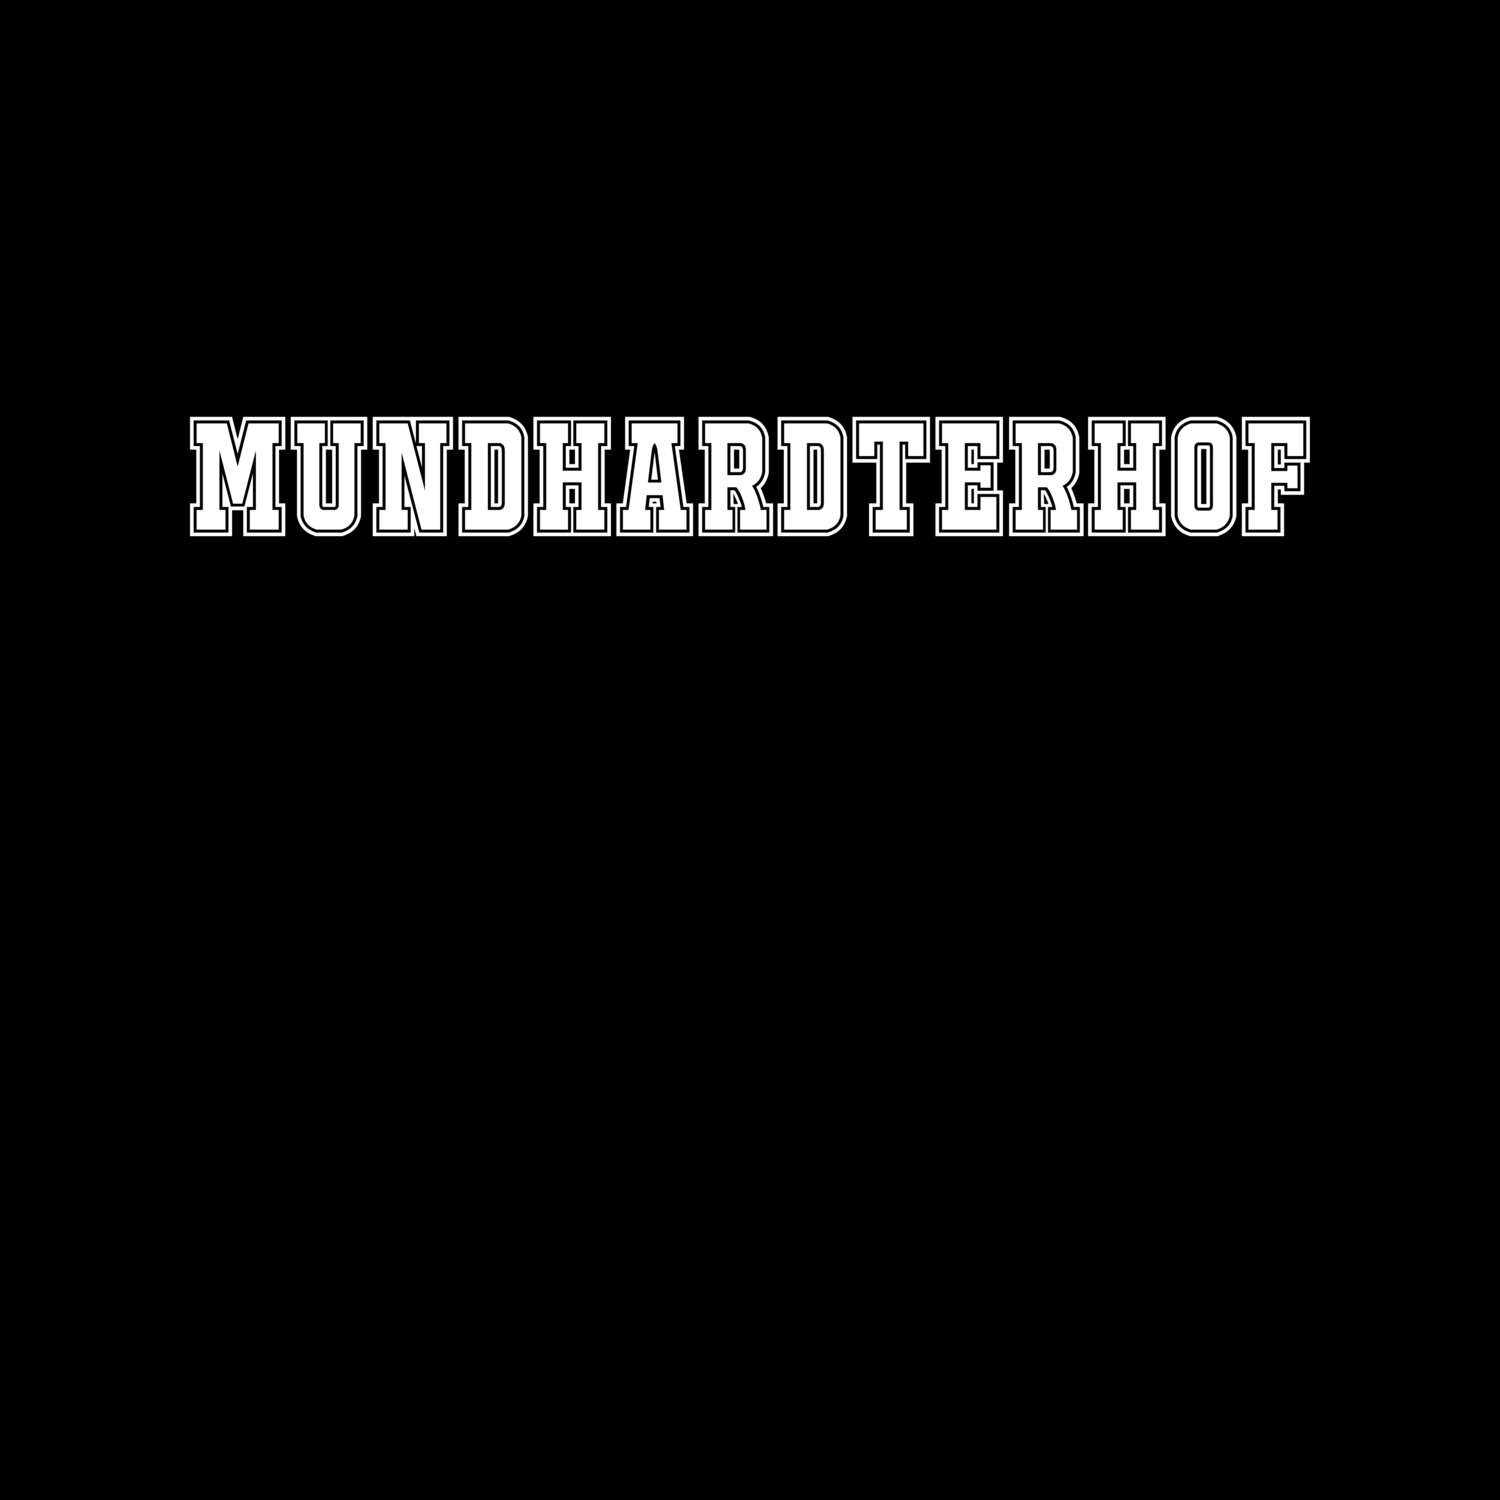 Mundhardterhof T-Shirt »Classic«